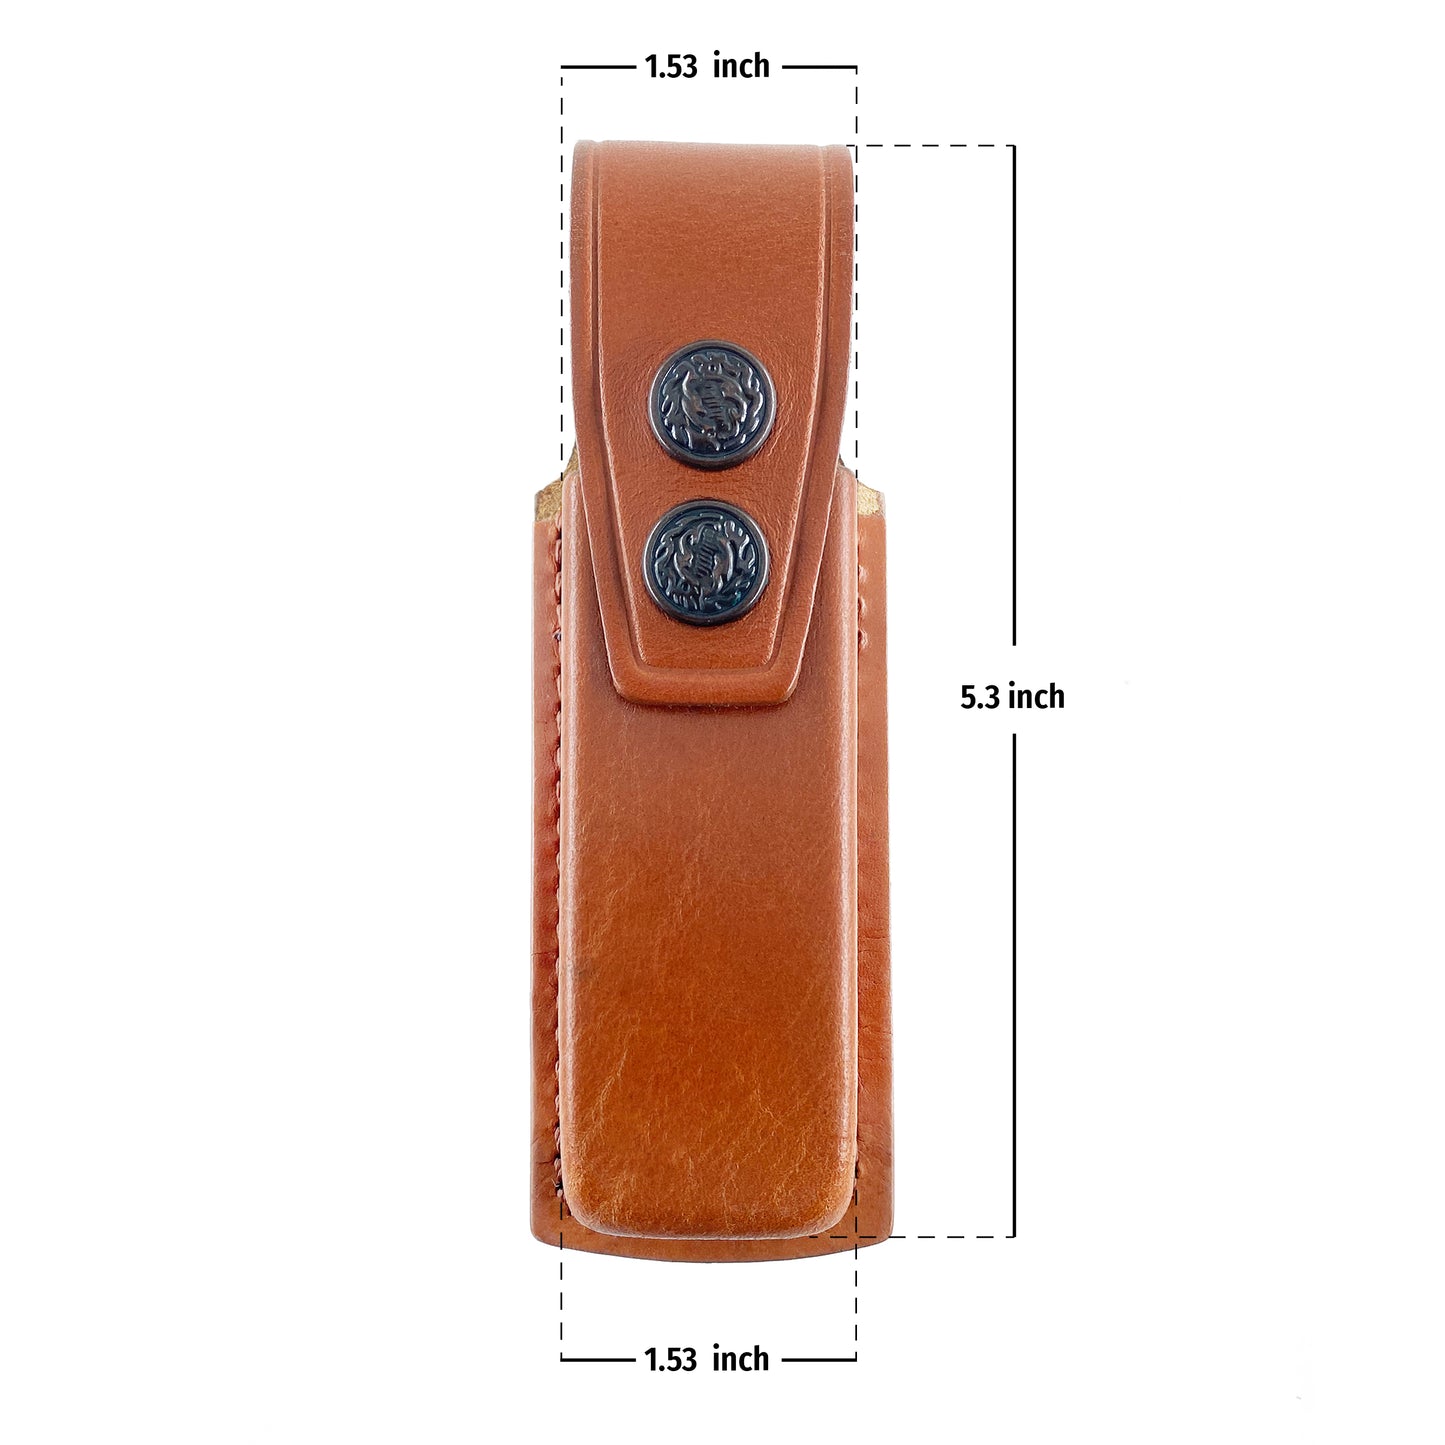 Holster K090 Handmade Leather Single Magazine Pouch/Carrier/Case for Glock 17 19 22 23